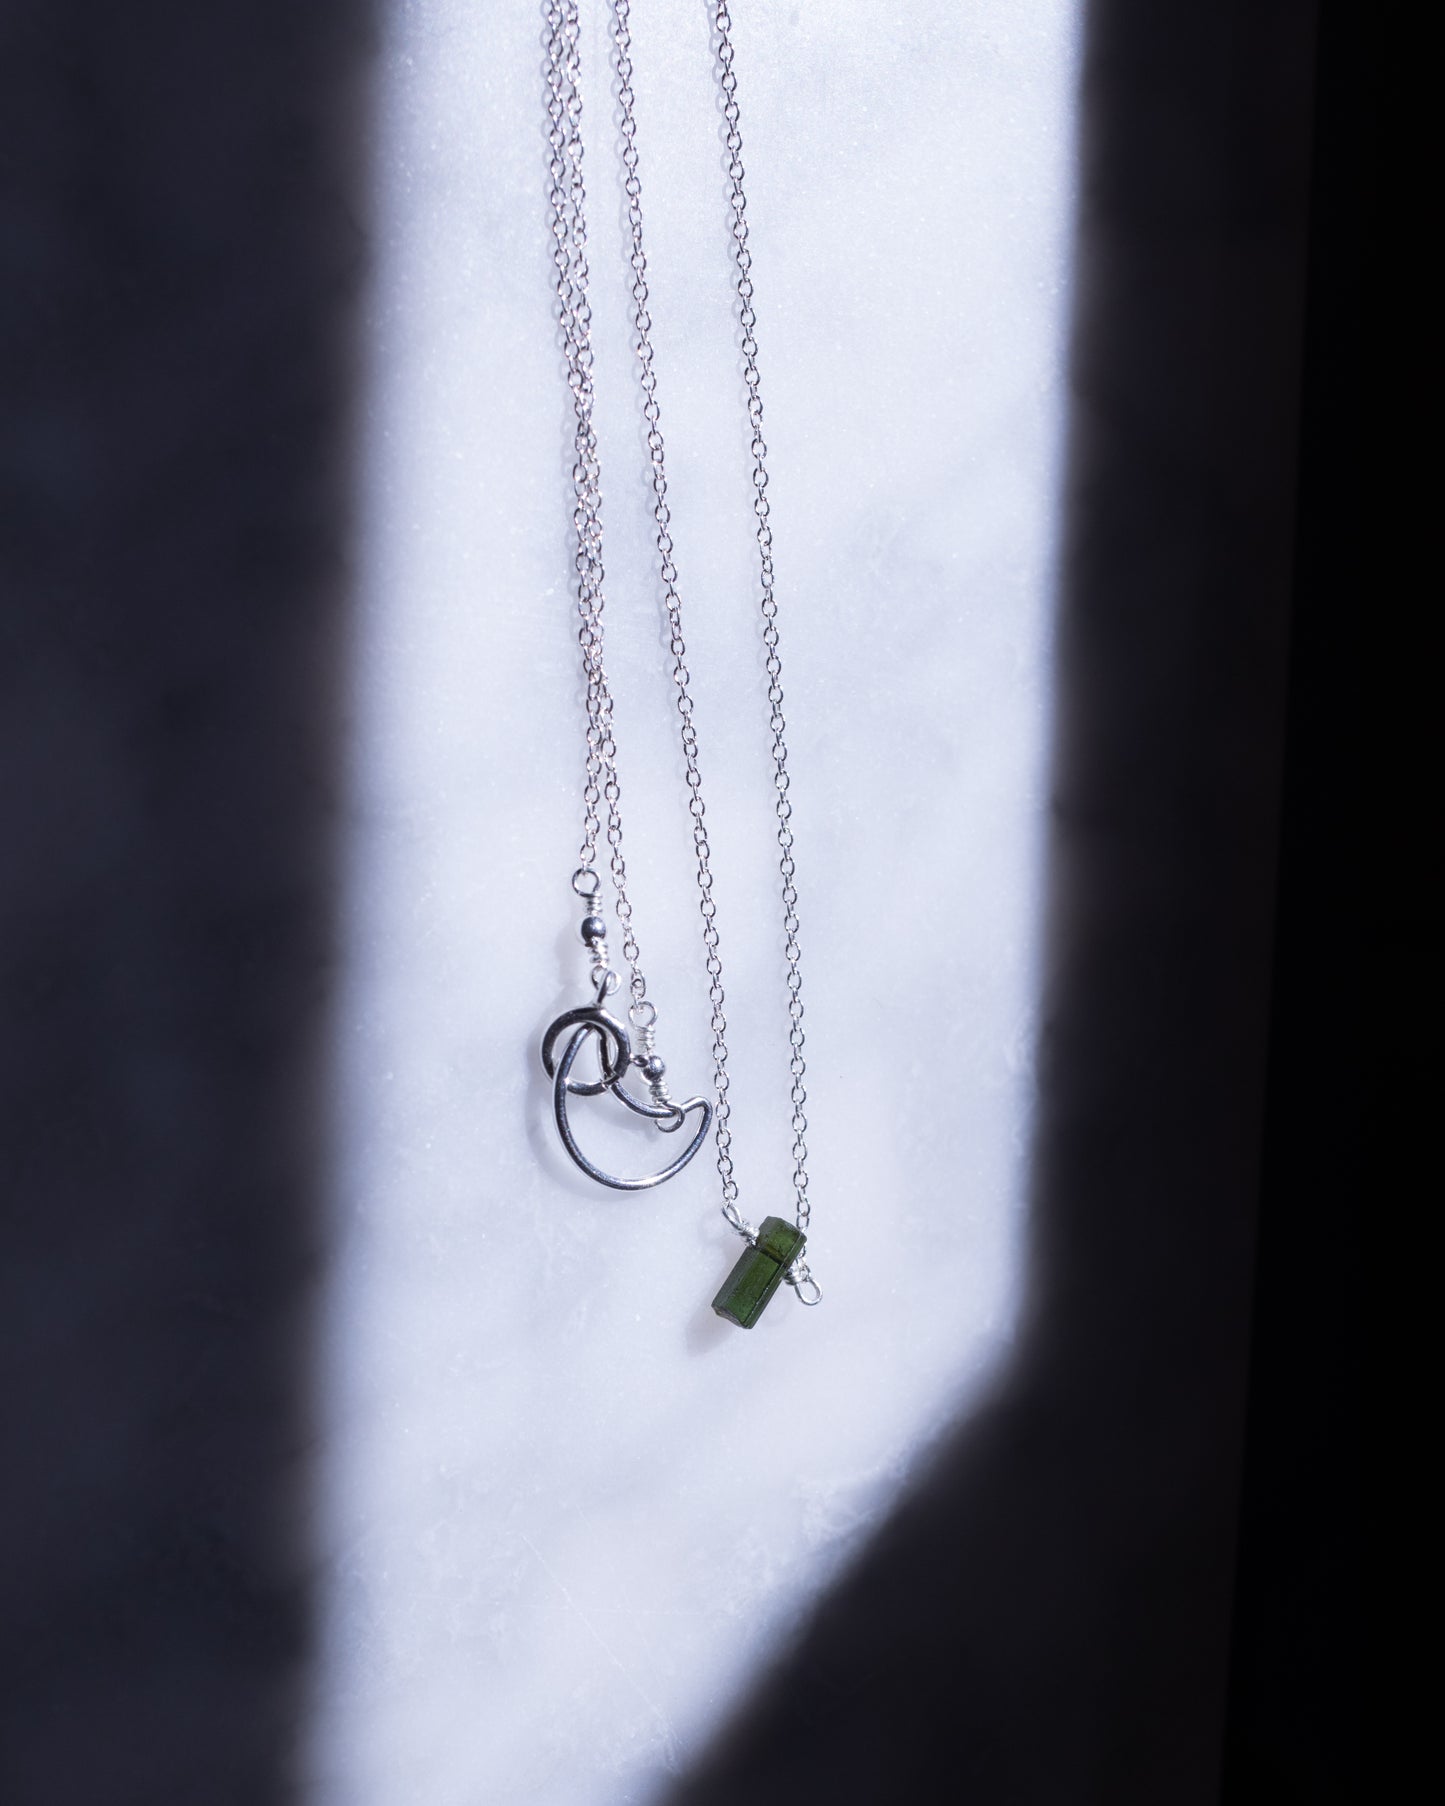 Green Tourmaline Necklace - ready to ship + preorder